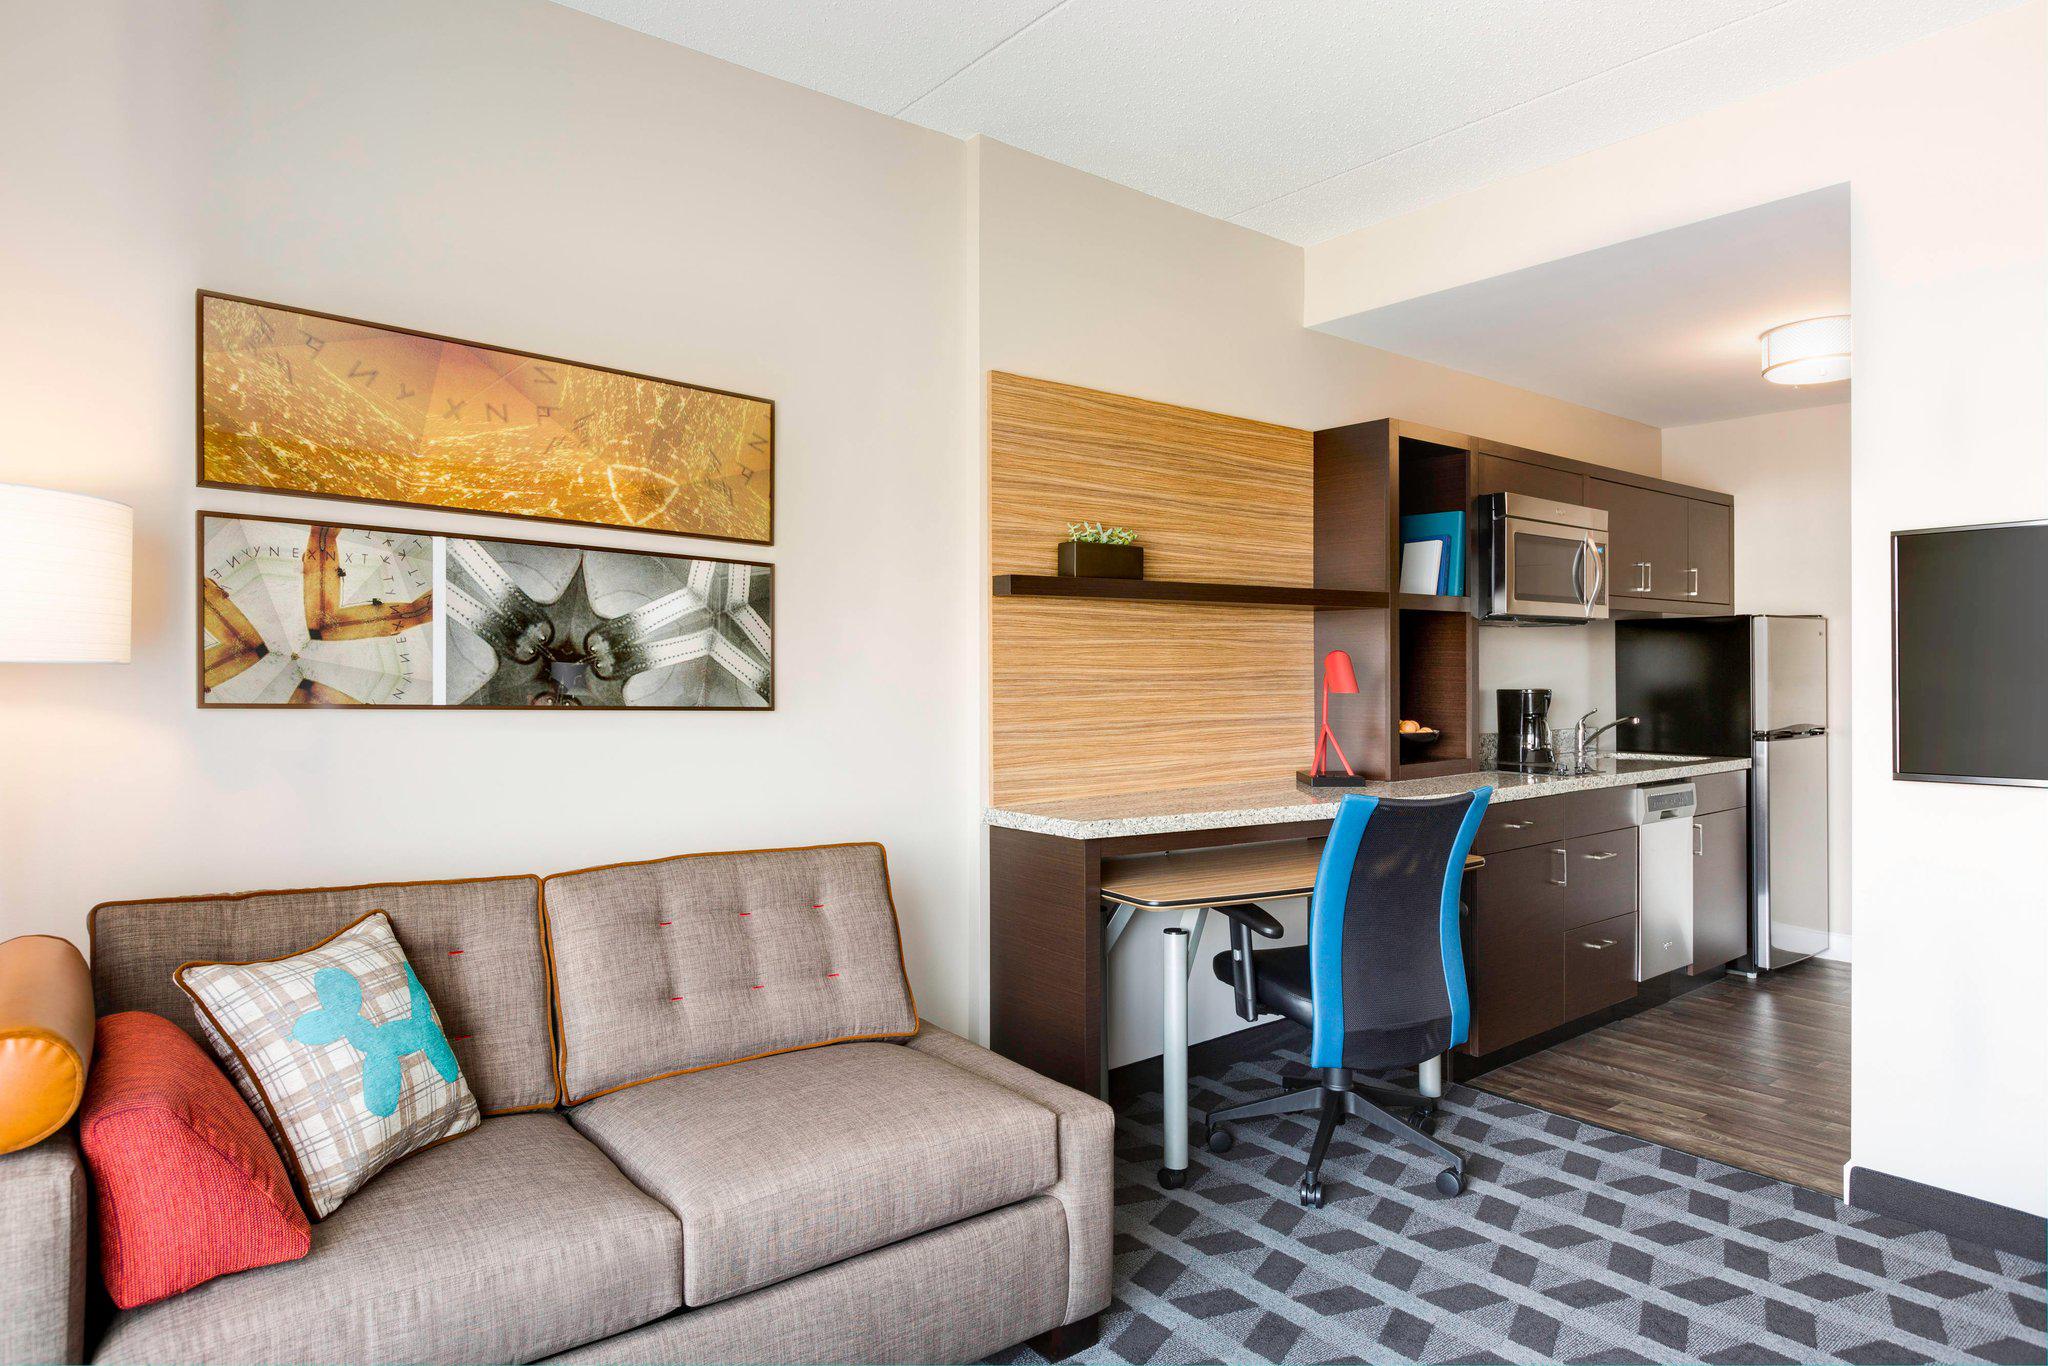 TownePlace Suites by Marriott Potomac Mills Woodbridge Photo